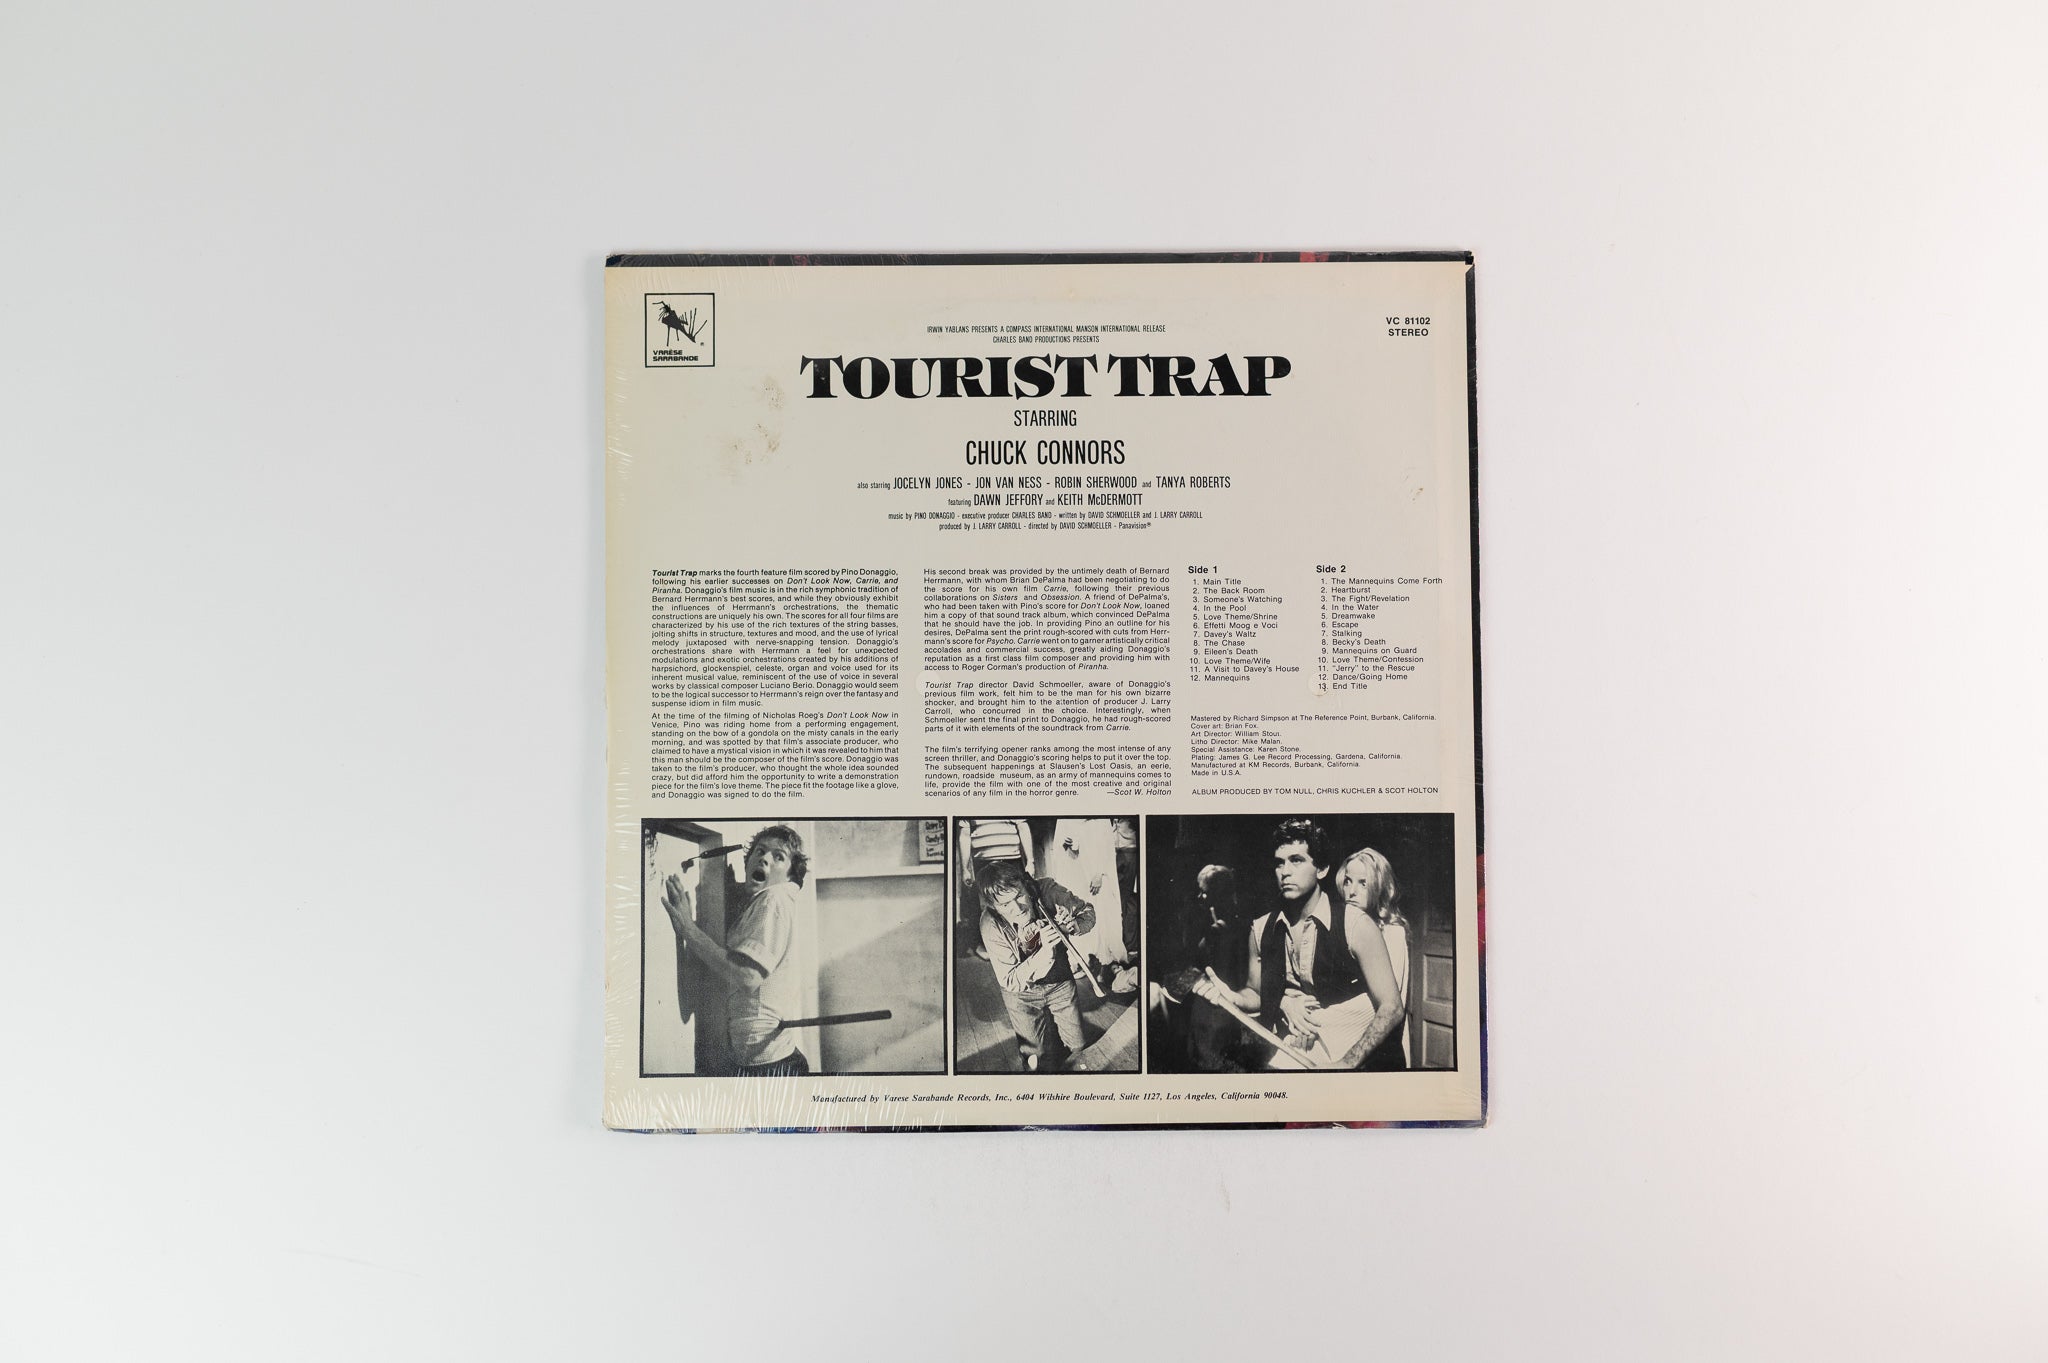 Pino Donaggio - Tourist Trap (Original Motion Picture Soundtrack) on Varese Sarabande Sealed